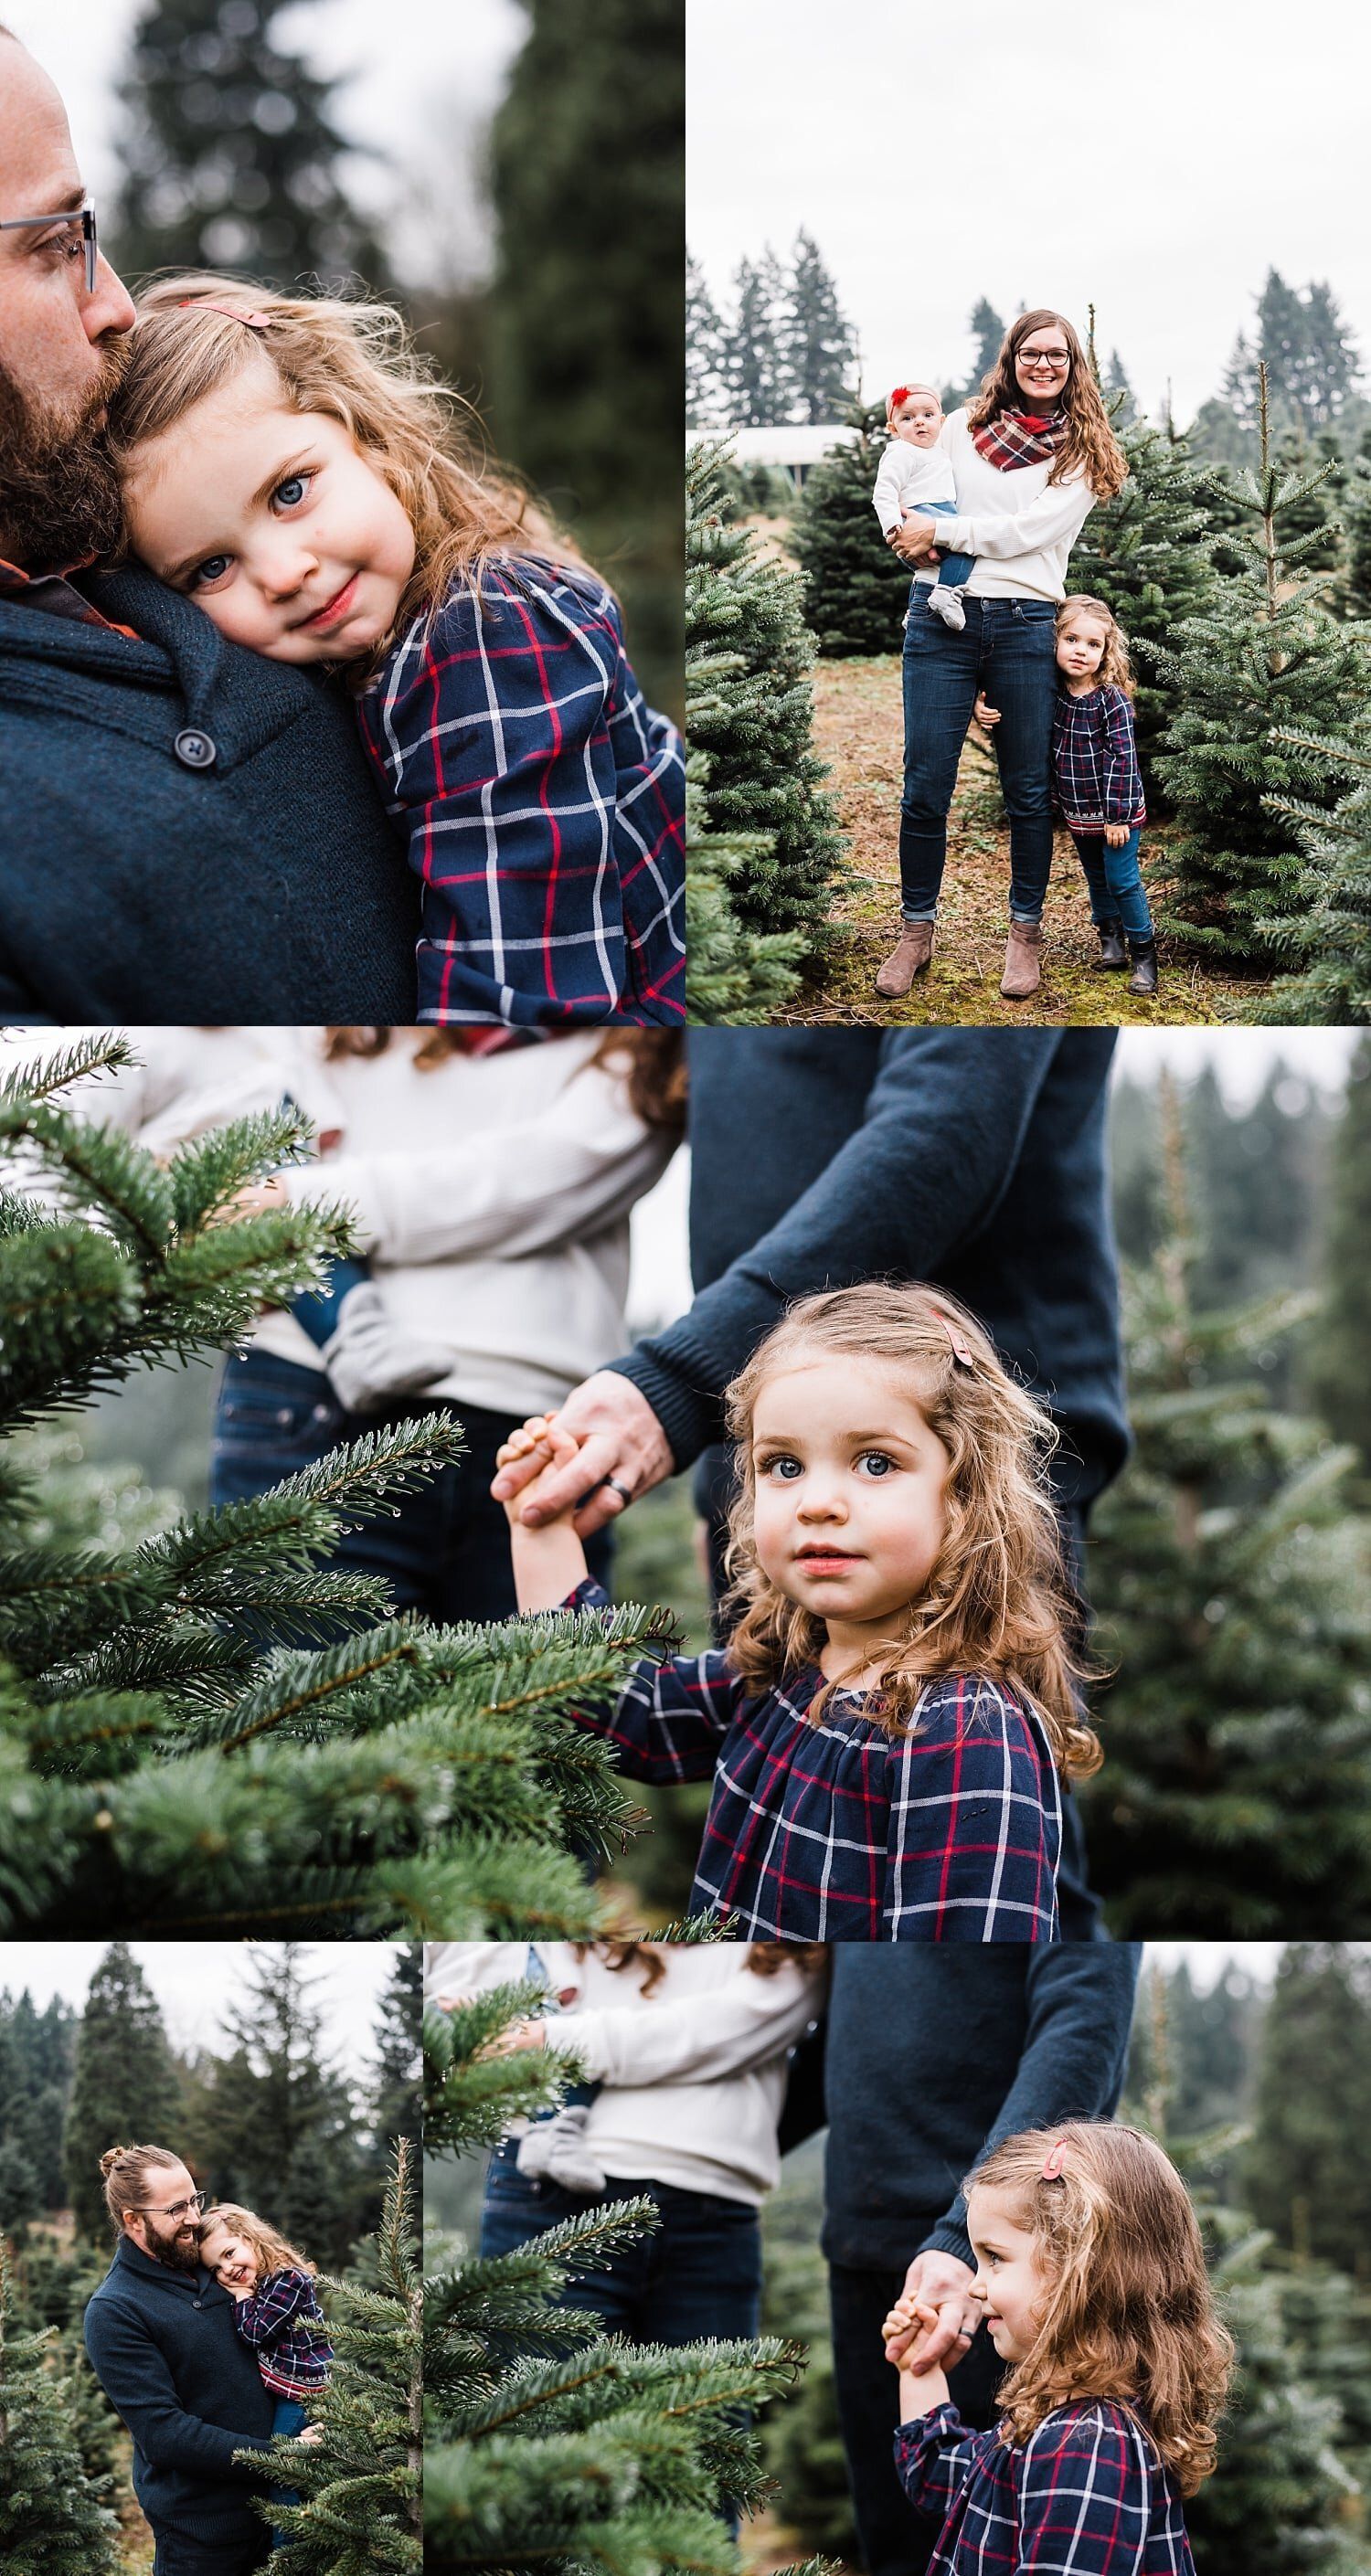 Christmas Tree Farm Family Photos | Merry Christmas! -   21 christmas photoshoot family outdoor ideas